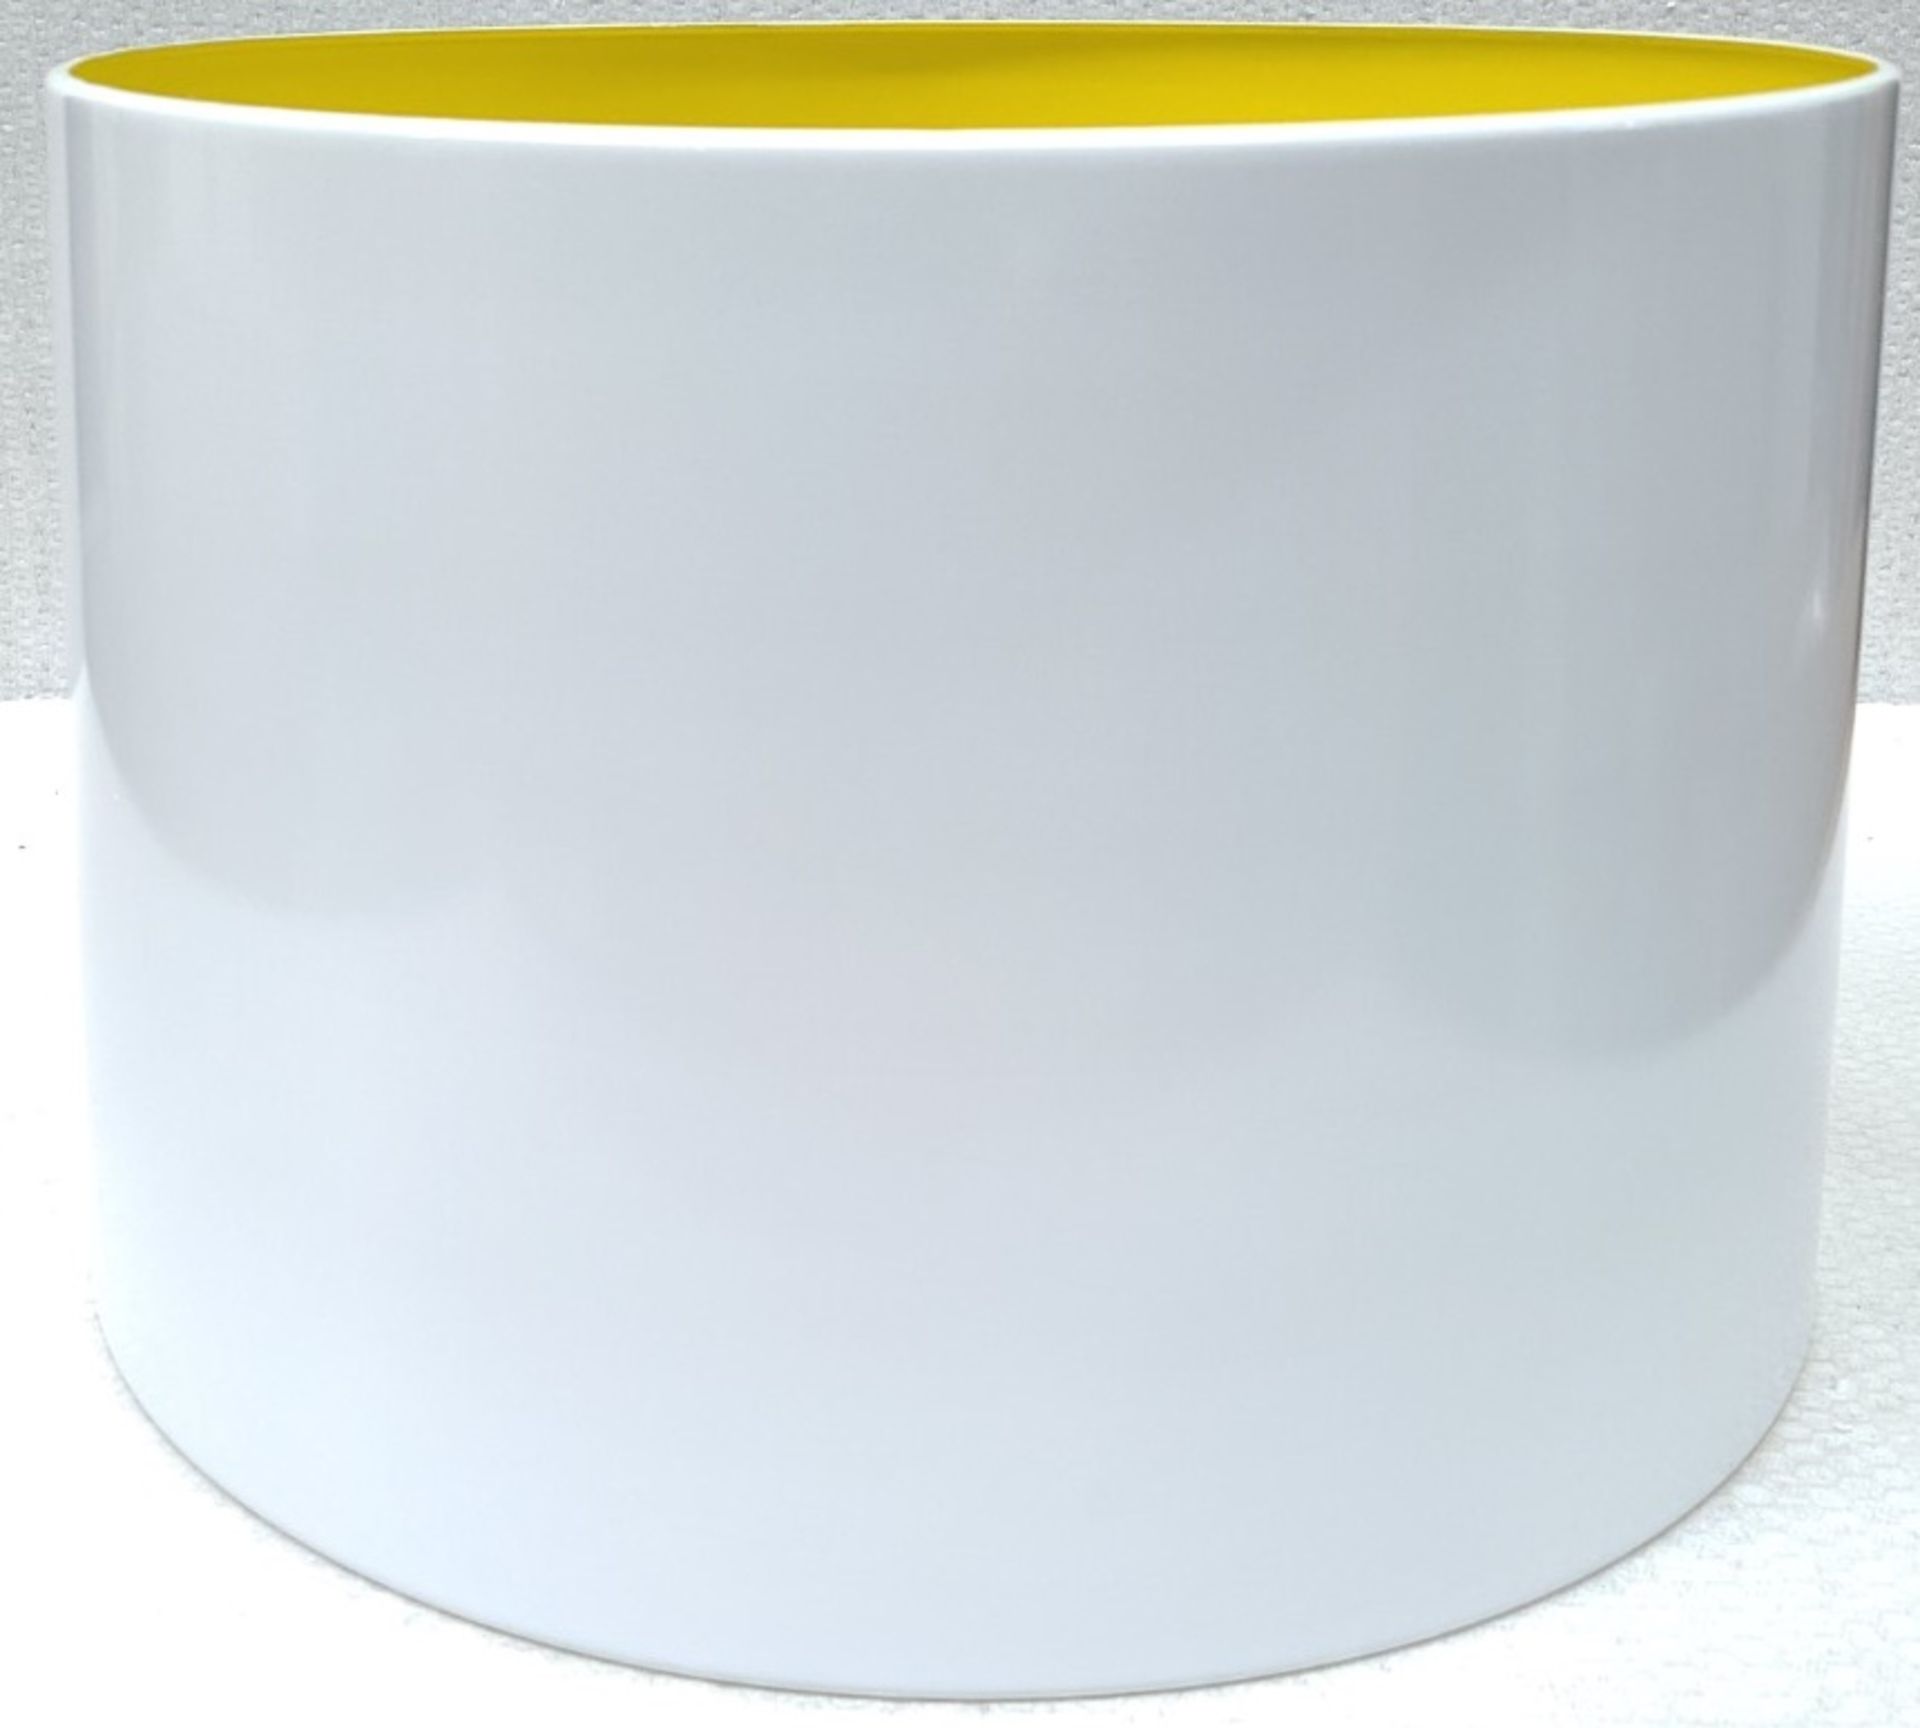 1 x BLUESUNTREE Large Scandi Metal White Pendant Drum Lamp Shape With Bright Yellow Interior 50cm - Image 5 of 5